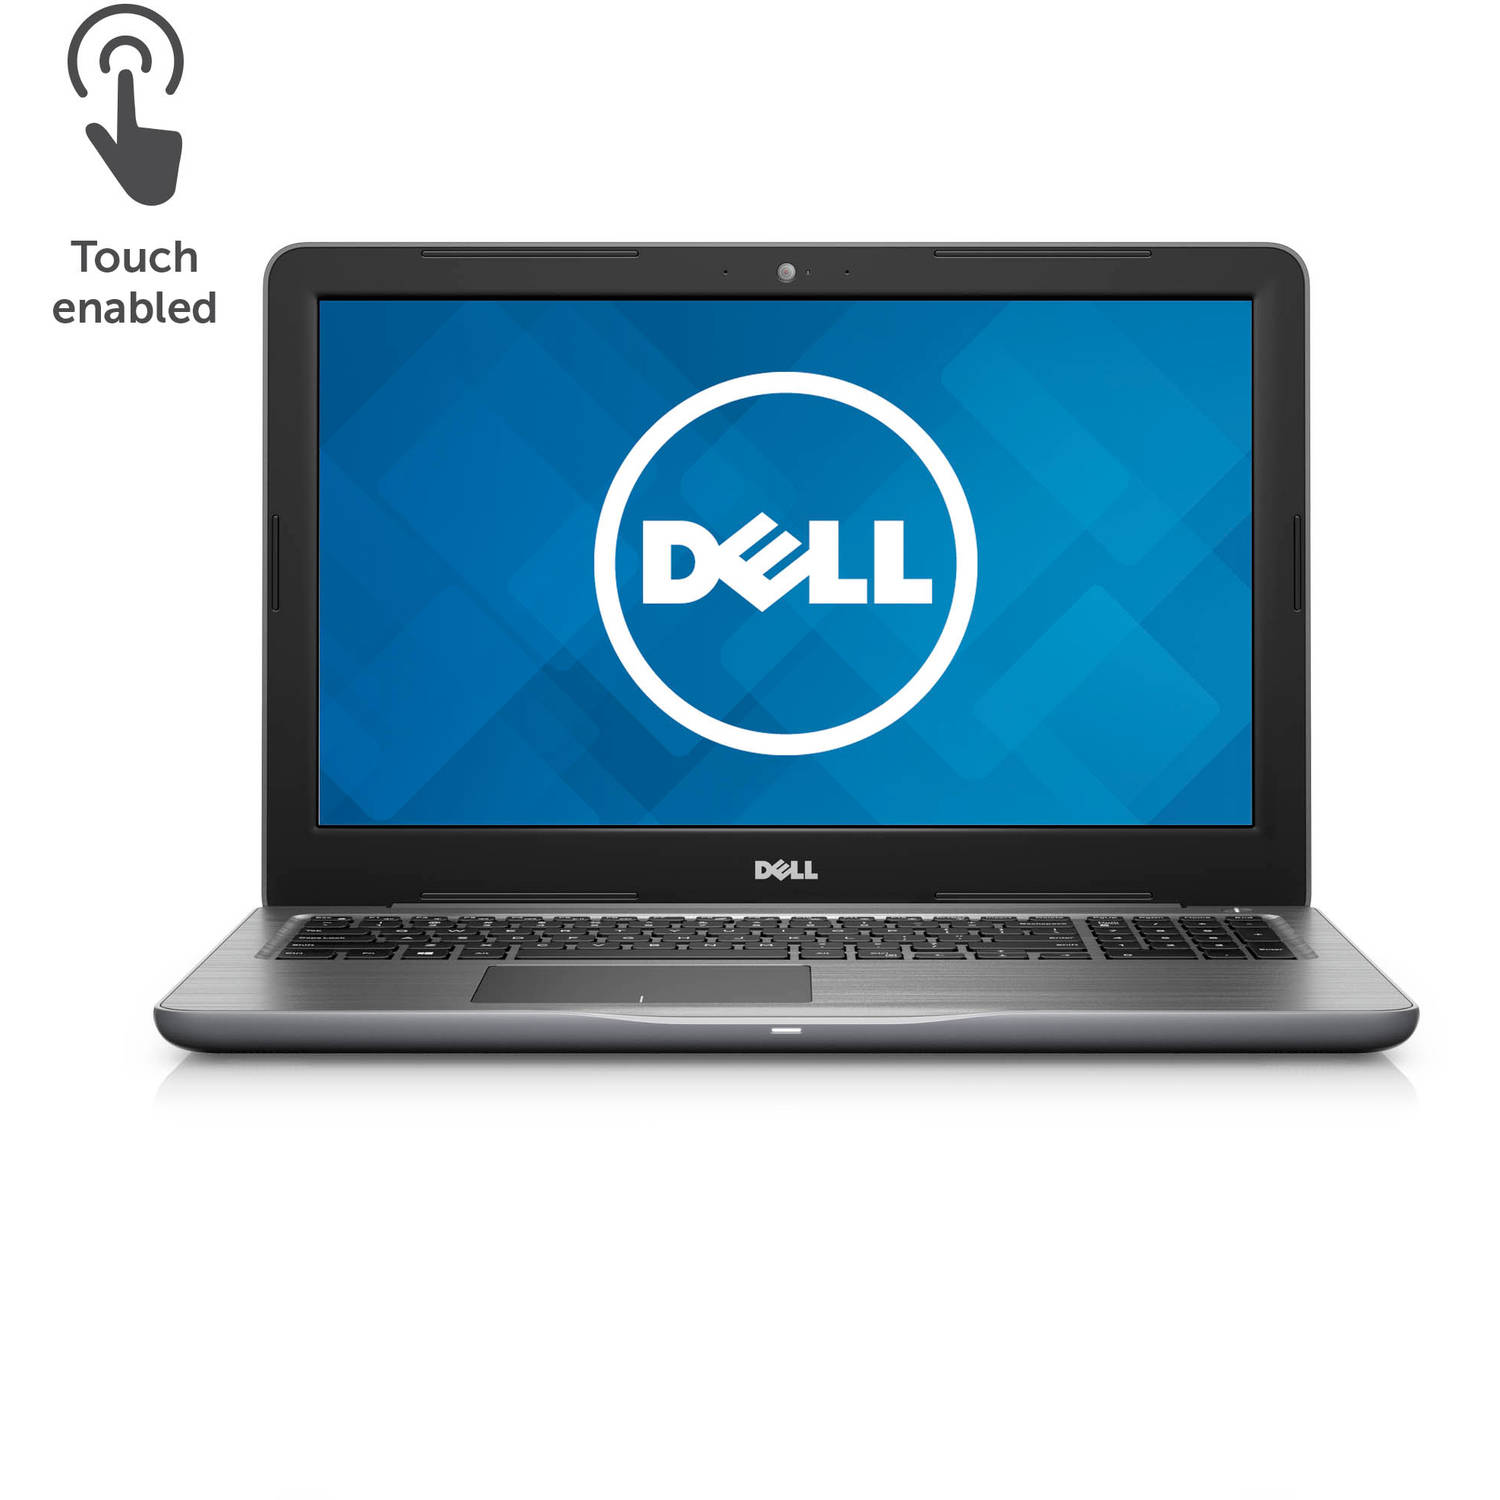 Dell - Inspiron 15.6" Touch-Screen Laptop - AMD FX - 16GB Memory - AMD Radeon R7 M445 - 1TB HD - Matte gray - image 1 of 8